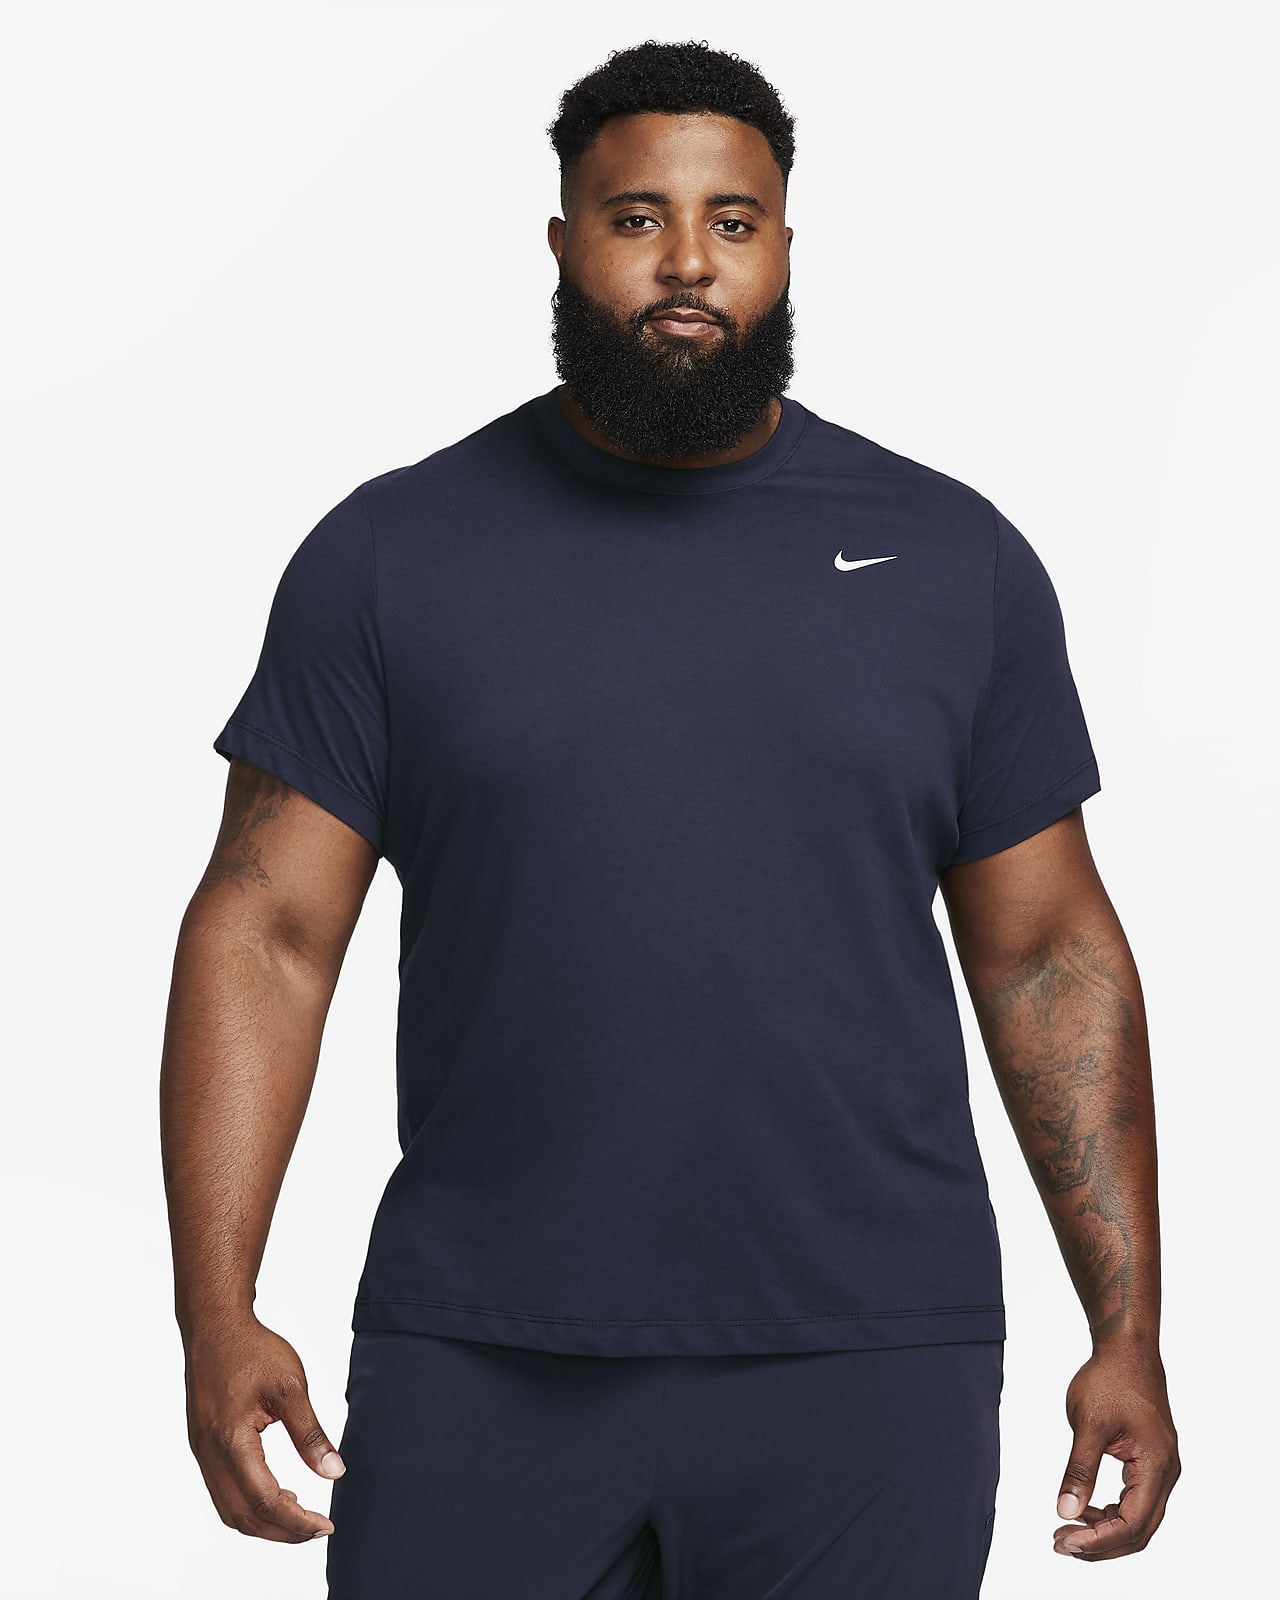 jeg behøver At interagere Plys dukke Nike Dri-FIT Men's Fitness T-Shirt. Nike.com